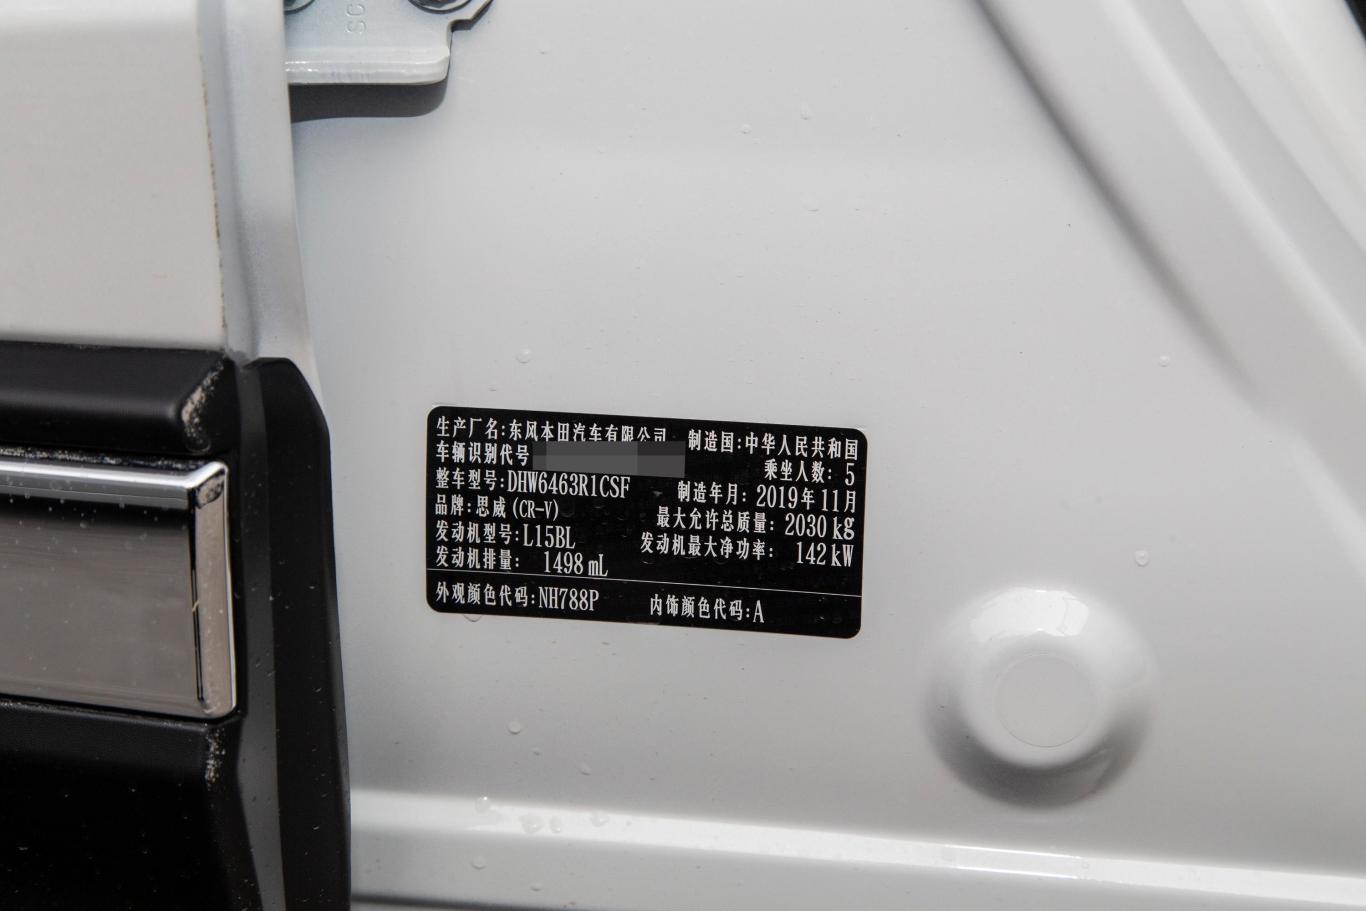 240turbo cvt 两驱 风尚版 国vi车辆信息铭牌图片